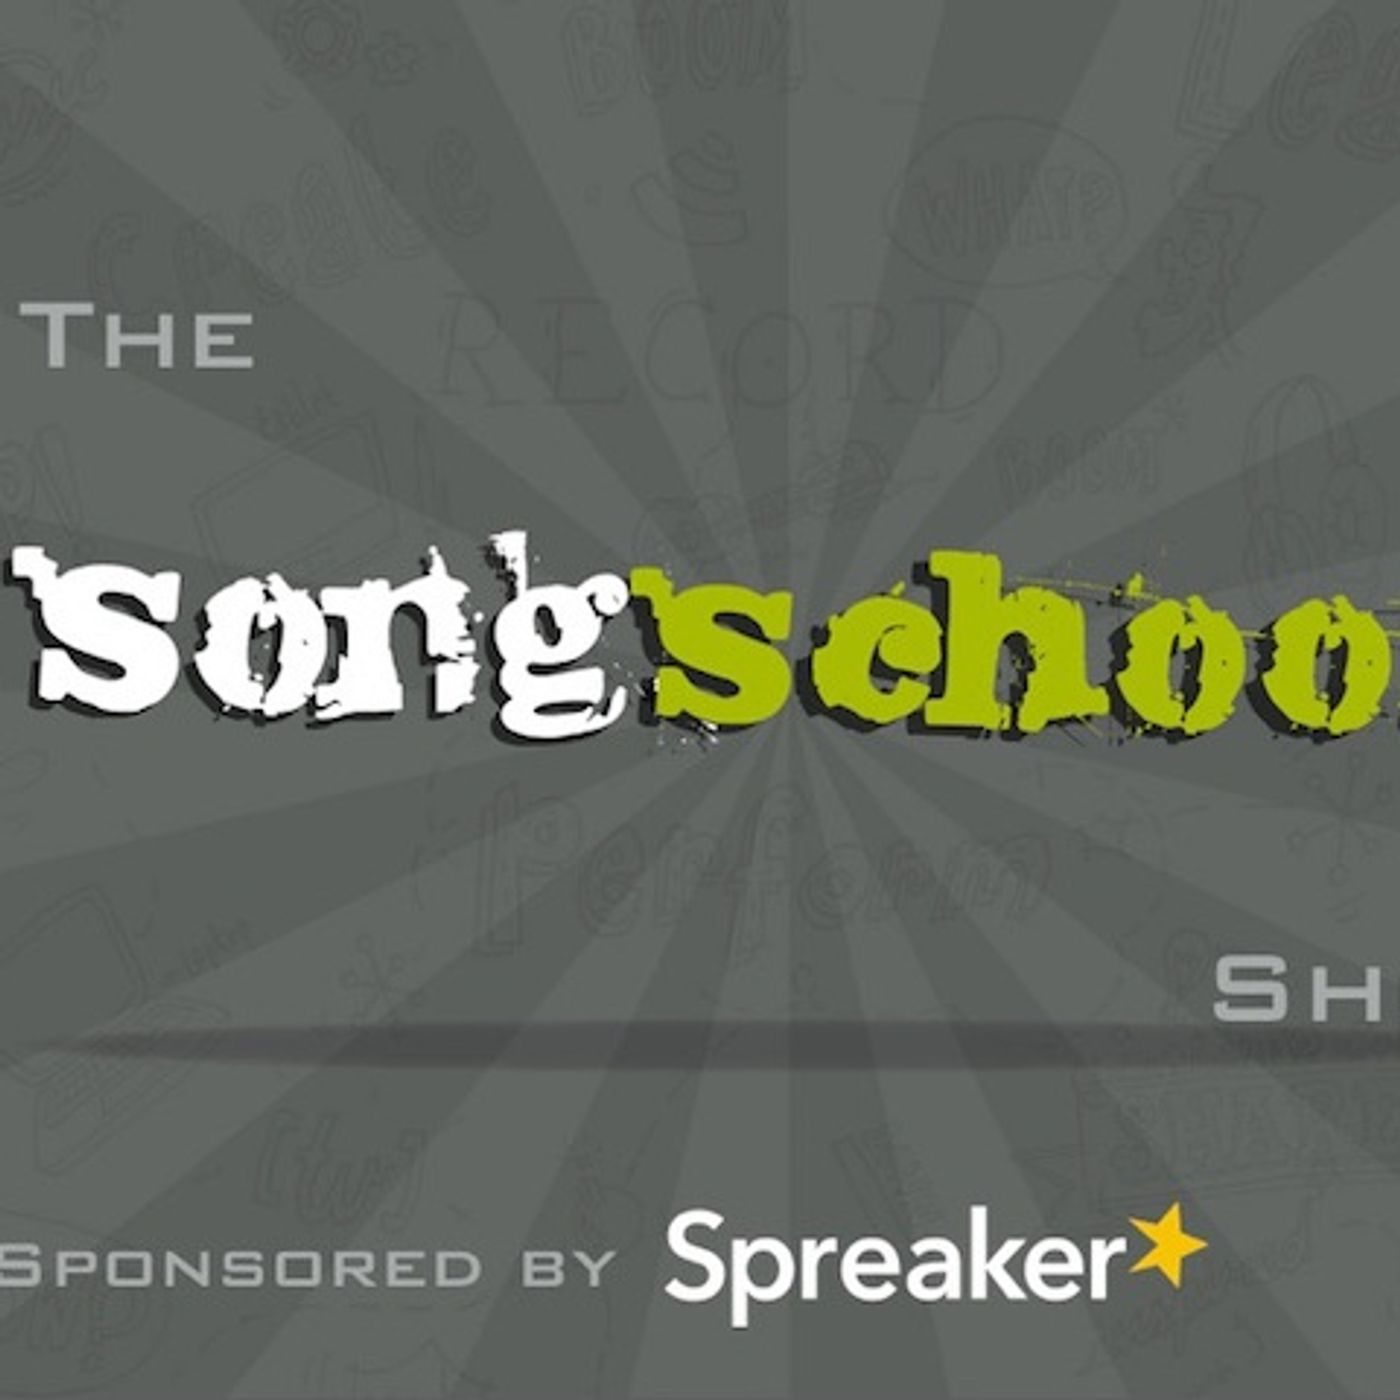 The Songschool Show @ St Marys 2019